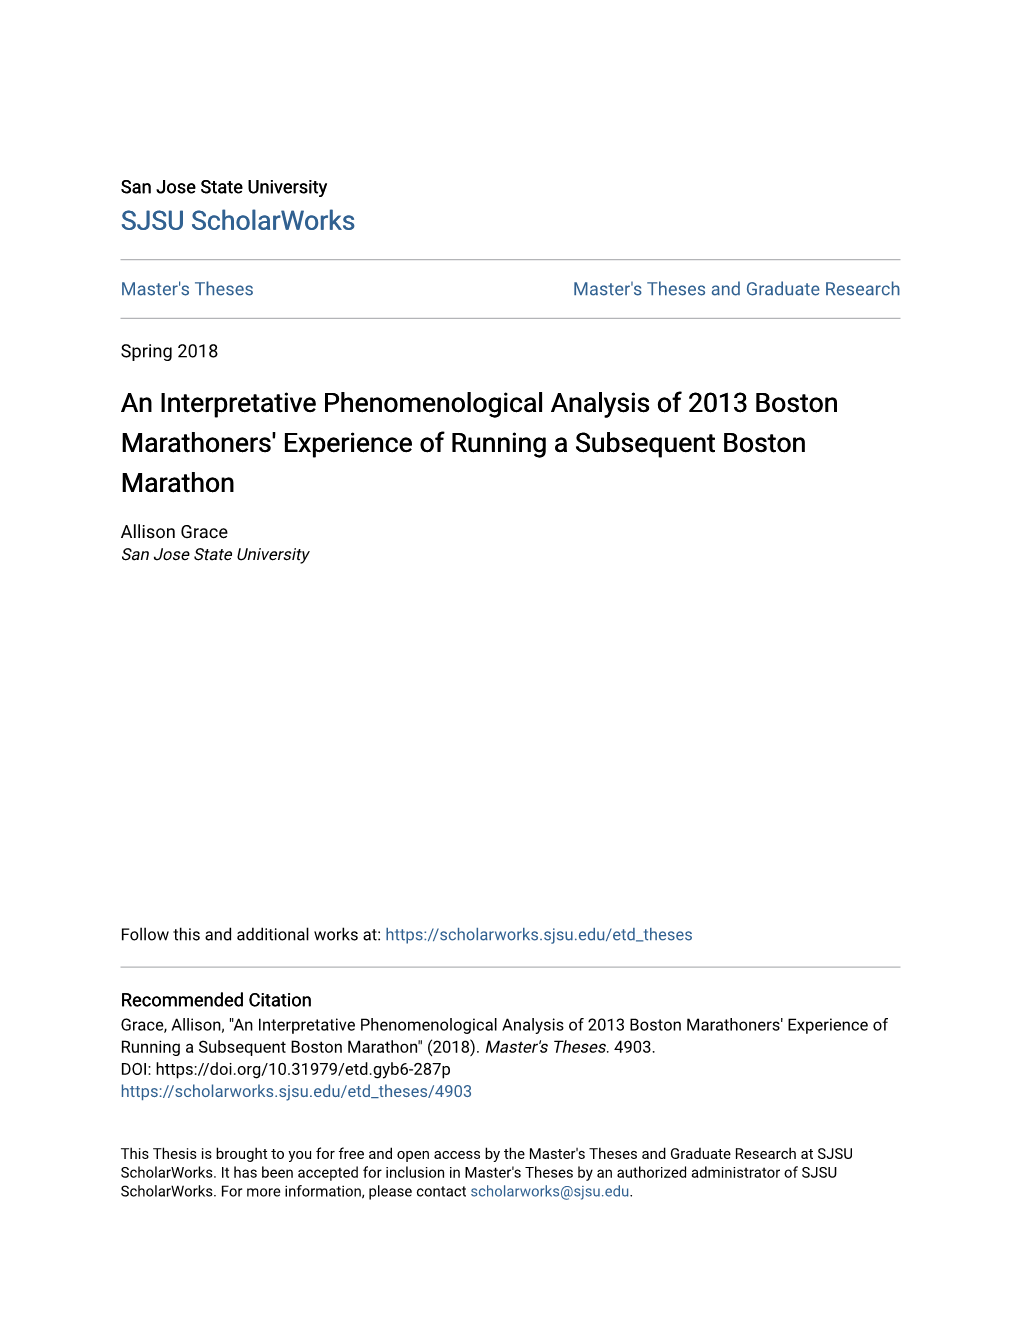 An Interpretative Phenomenological Analysis of 2013 Boston Marathoners' Experience of Running a Subsequent Boston Marathon